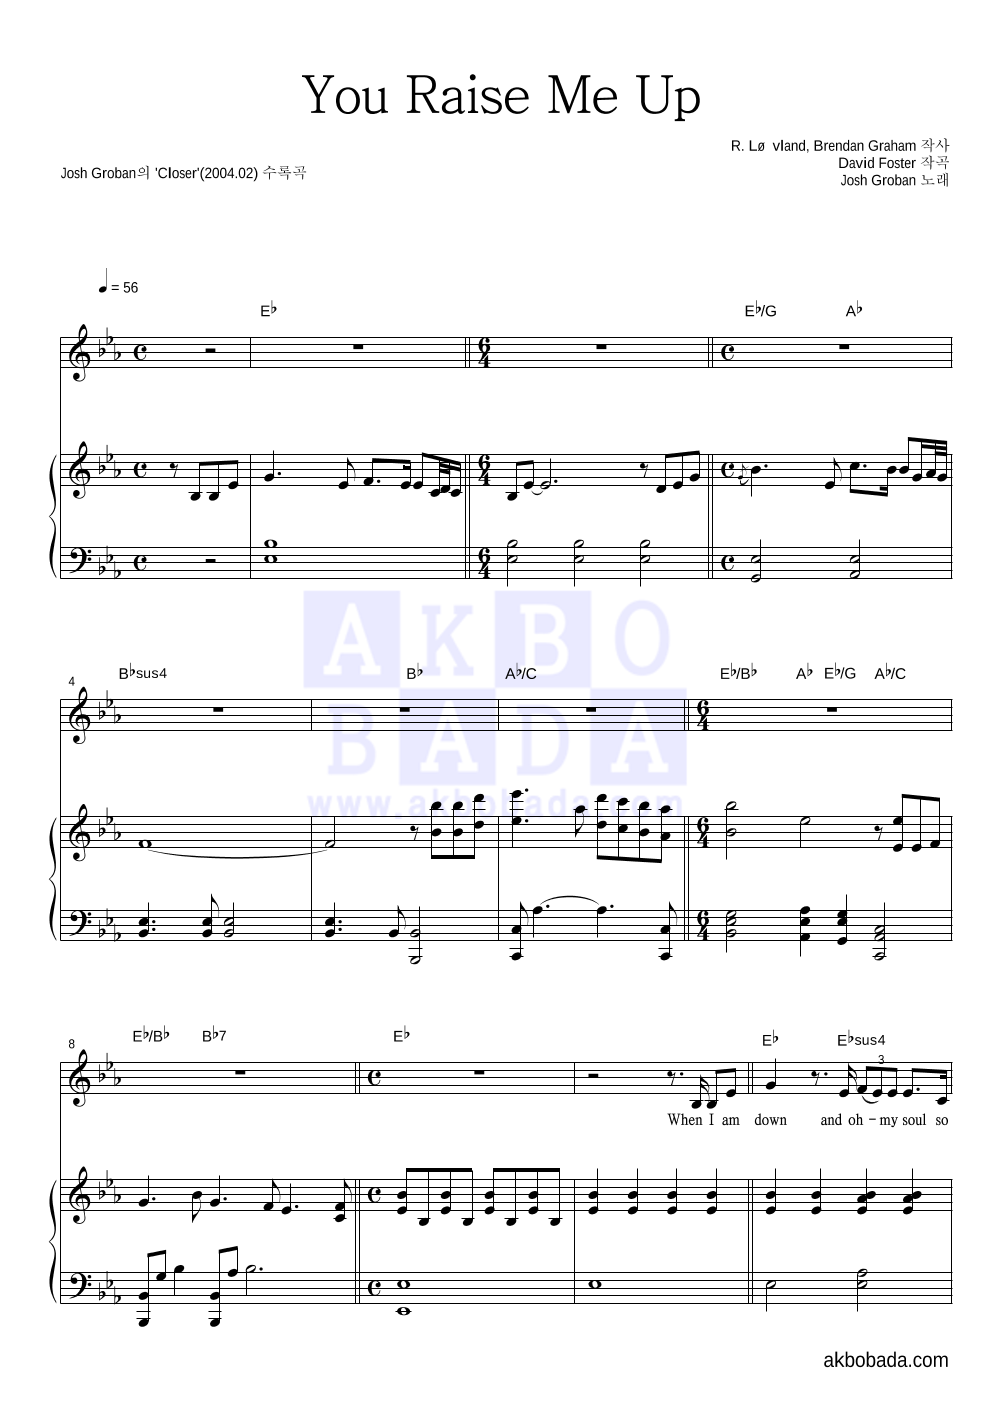 Josh Groban - You Raise Me Up 피아노 3단 악보 